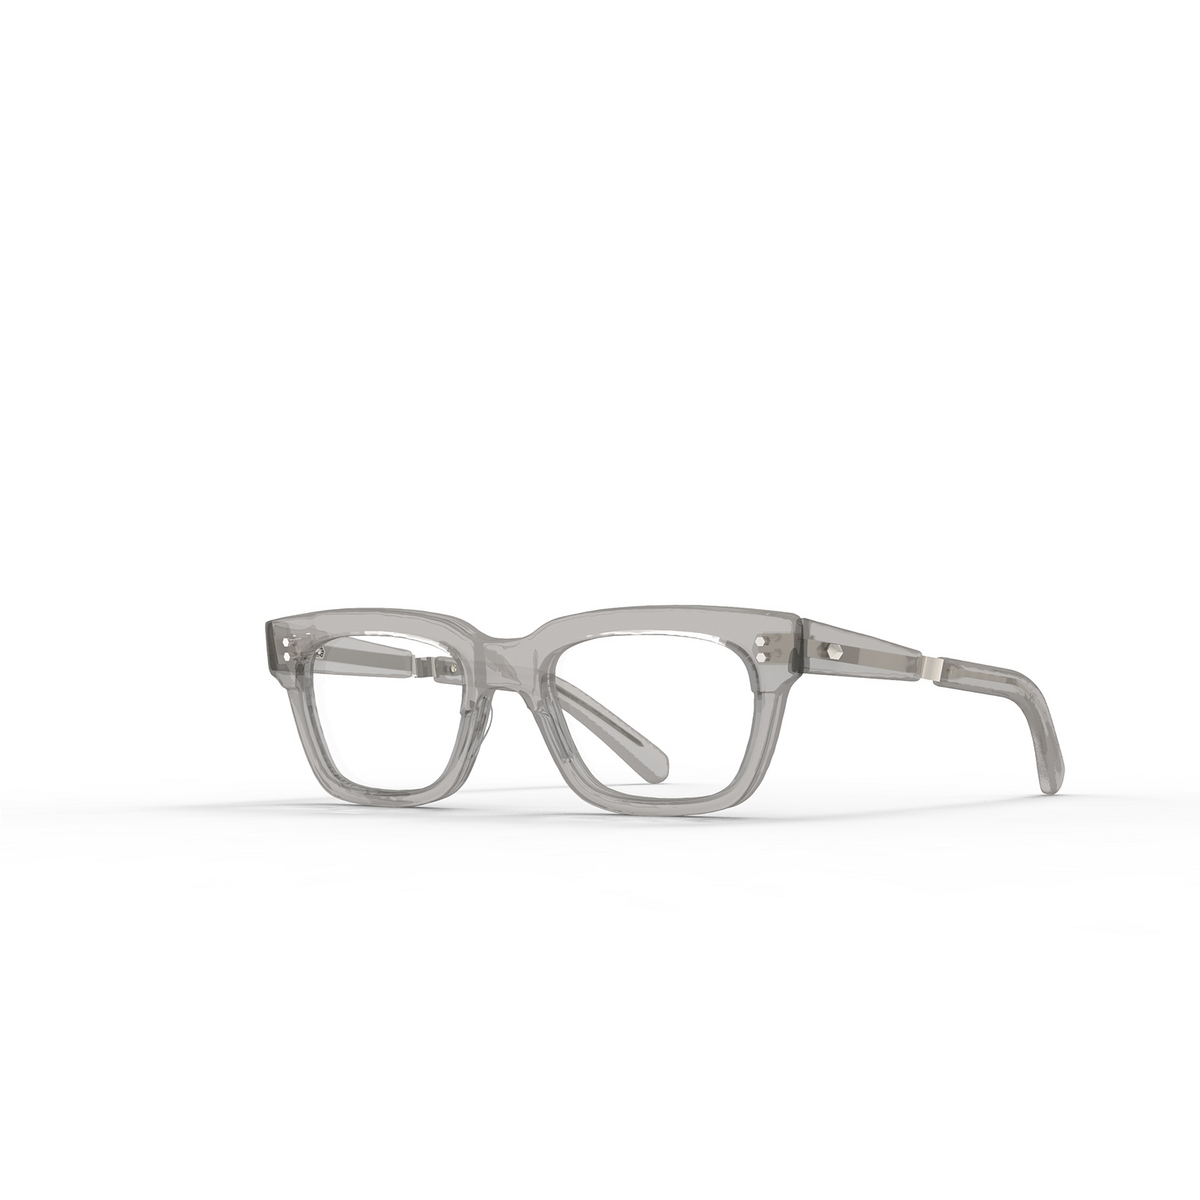 Mr. Leight ASHE C Eyeglasses GRYCRY-PLT Grey Crystal-Platinum - three-quarters view